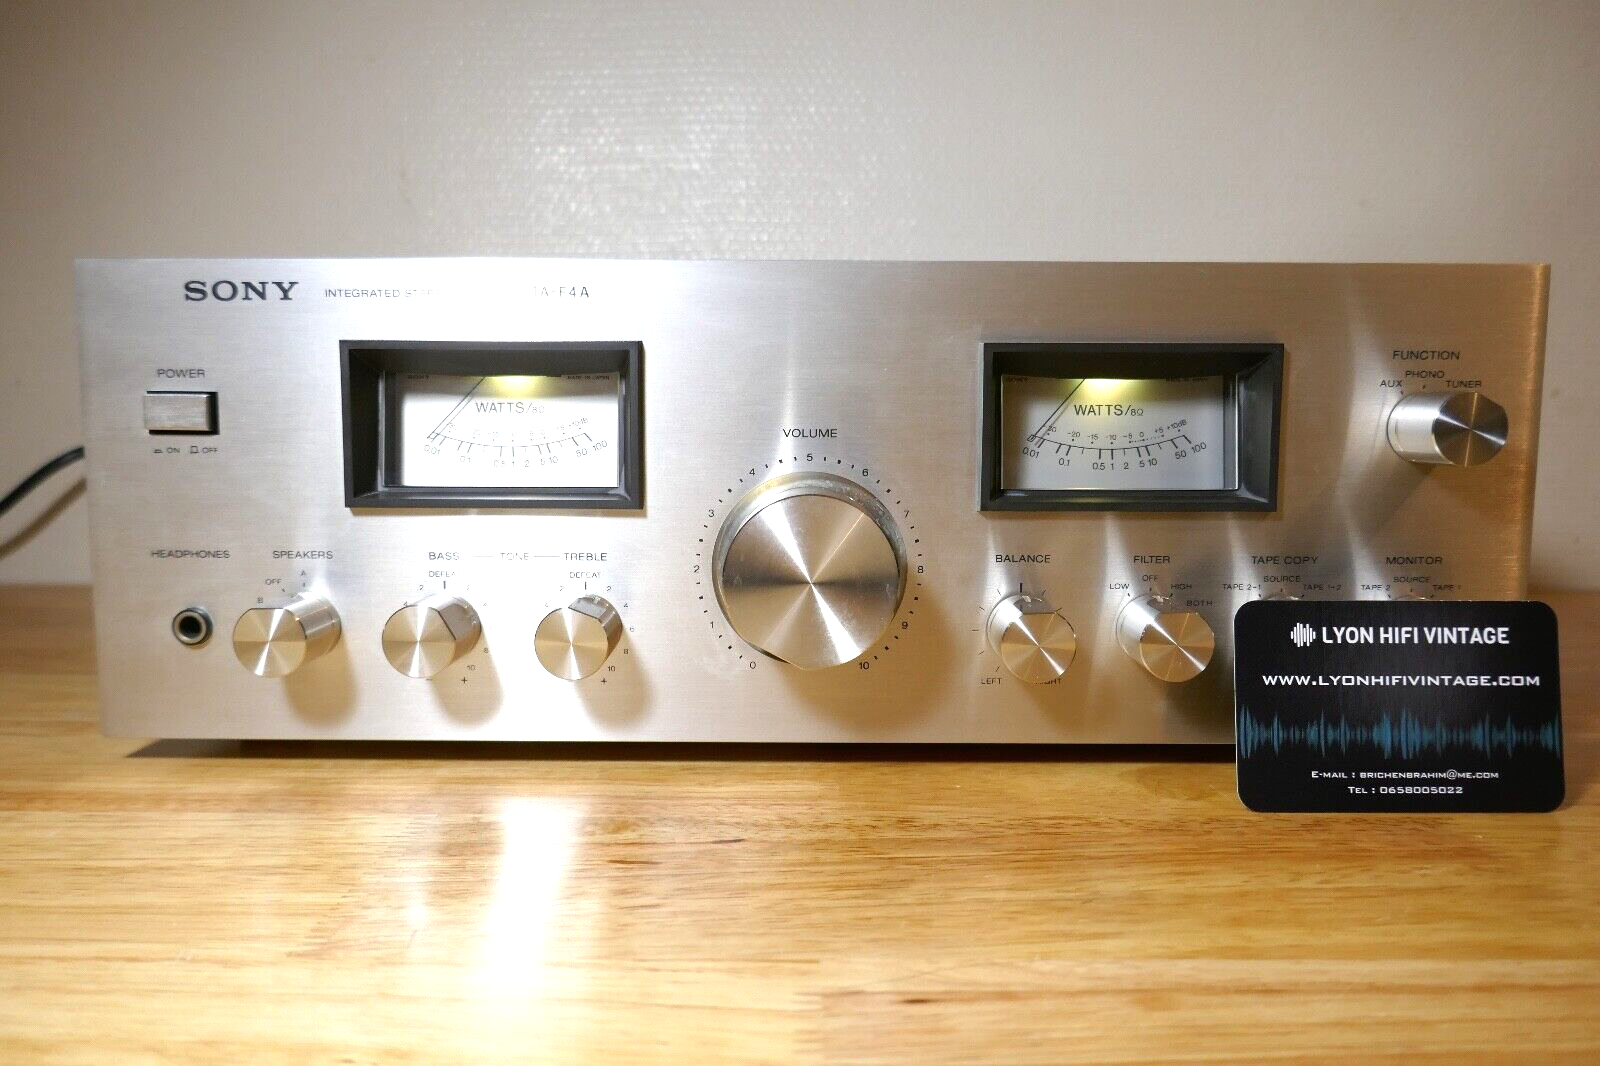 amplificateur amplifier Sony TA-F4A vintage occasion